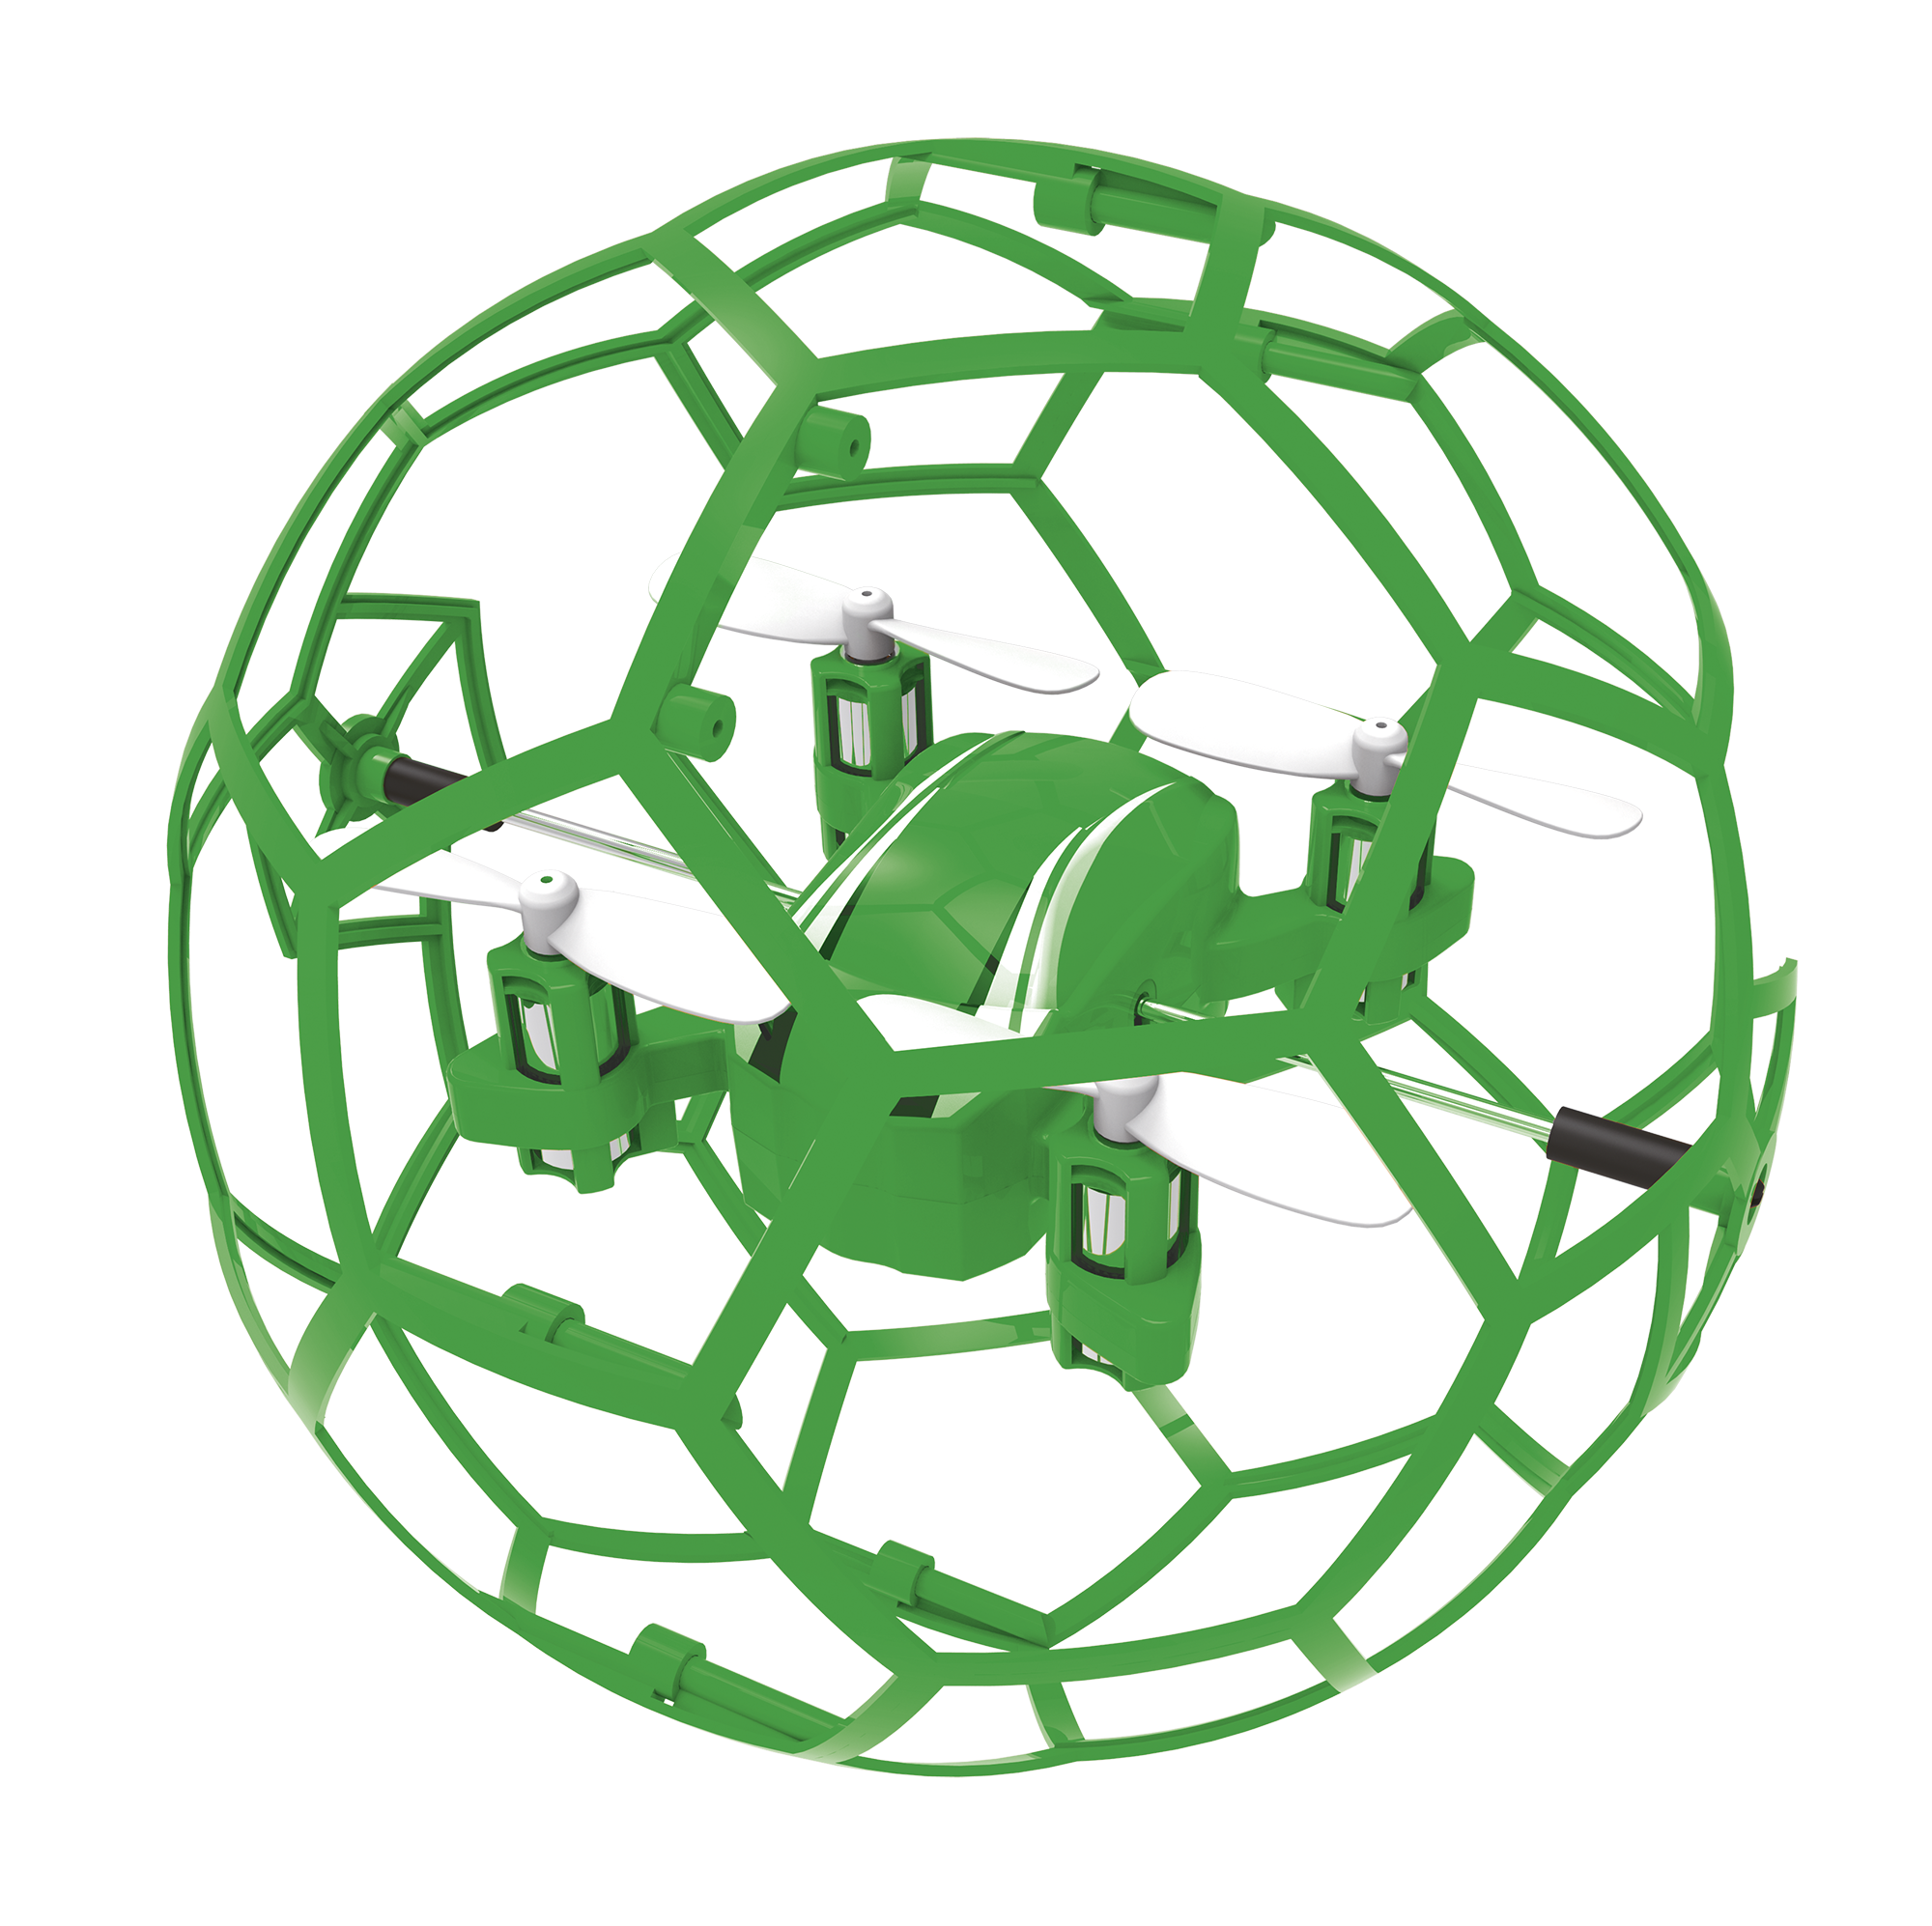 Ball drone - MOTOR & CO.